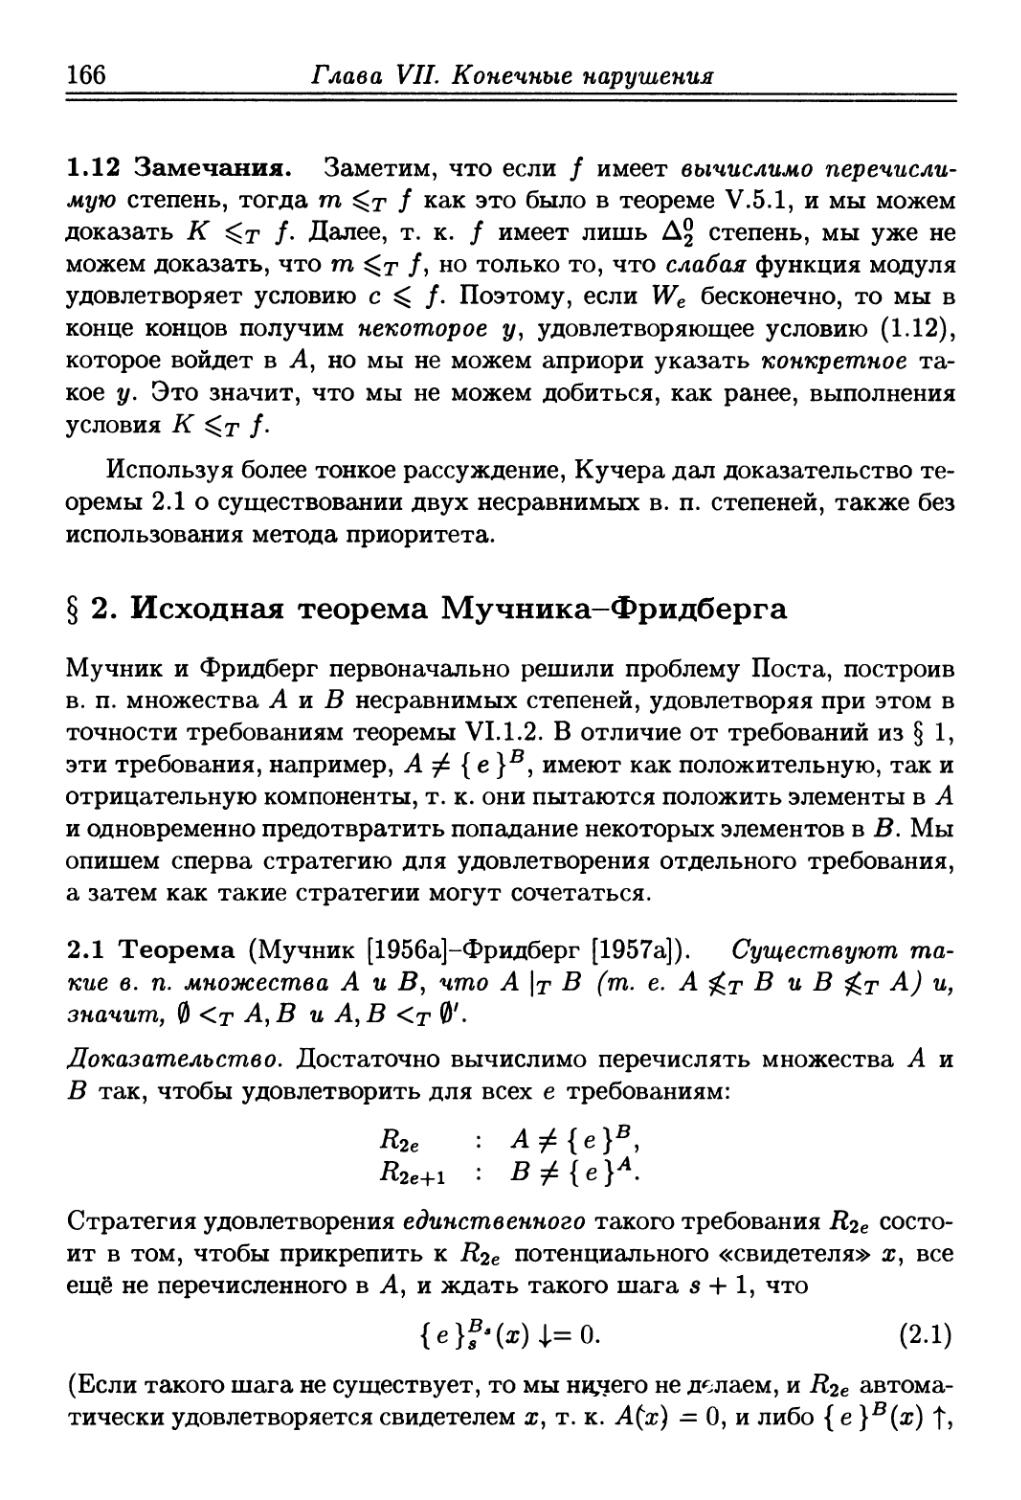 § 2. Исходная теорема Мучника-Фридберга